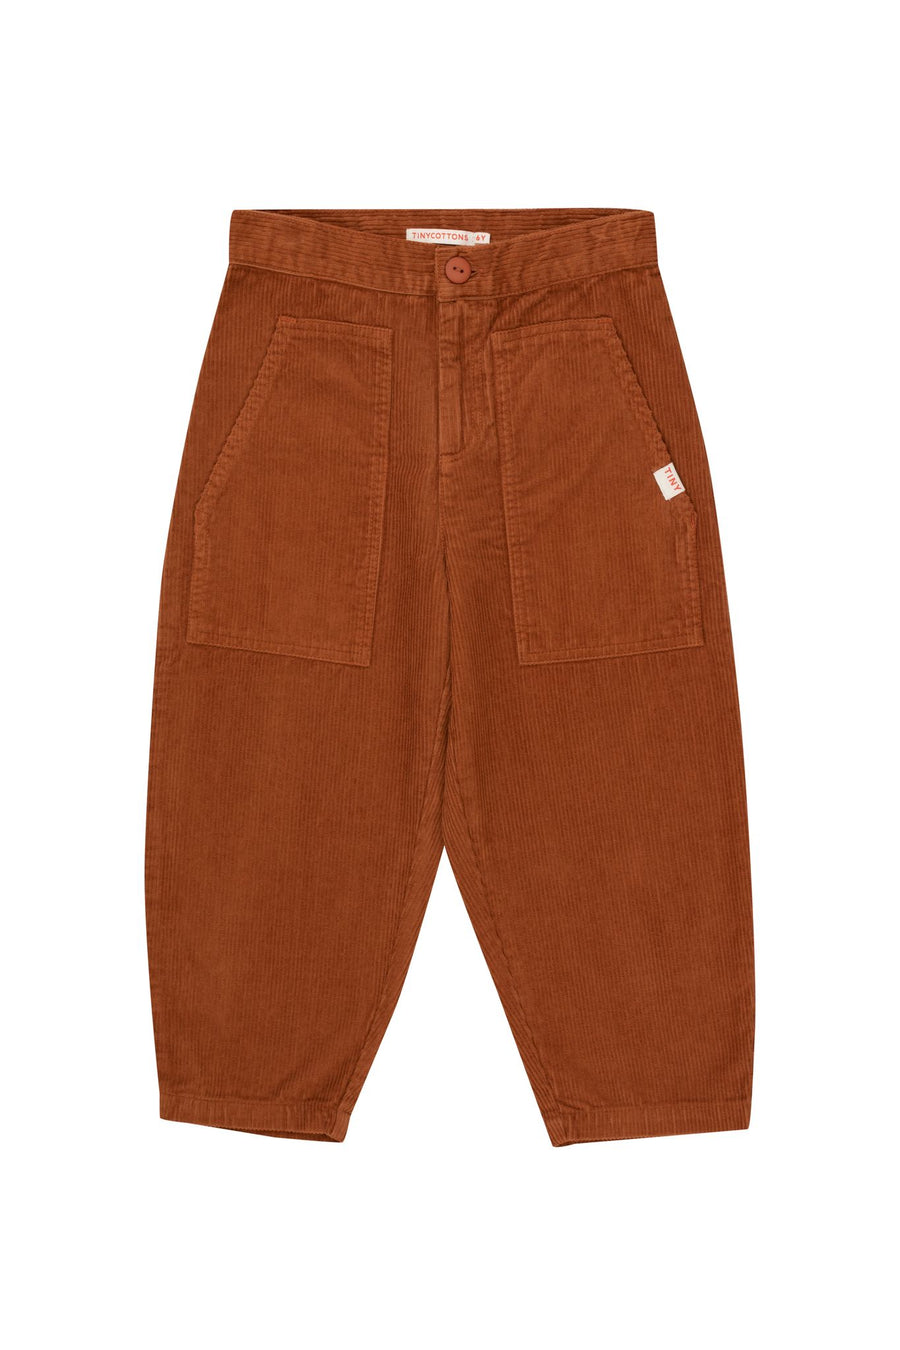 Tiny Cottons - corduroy pants - brown